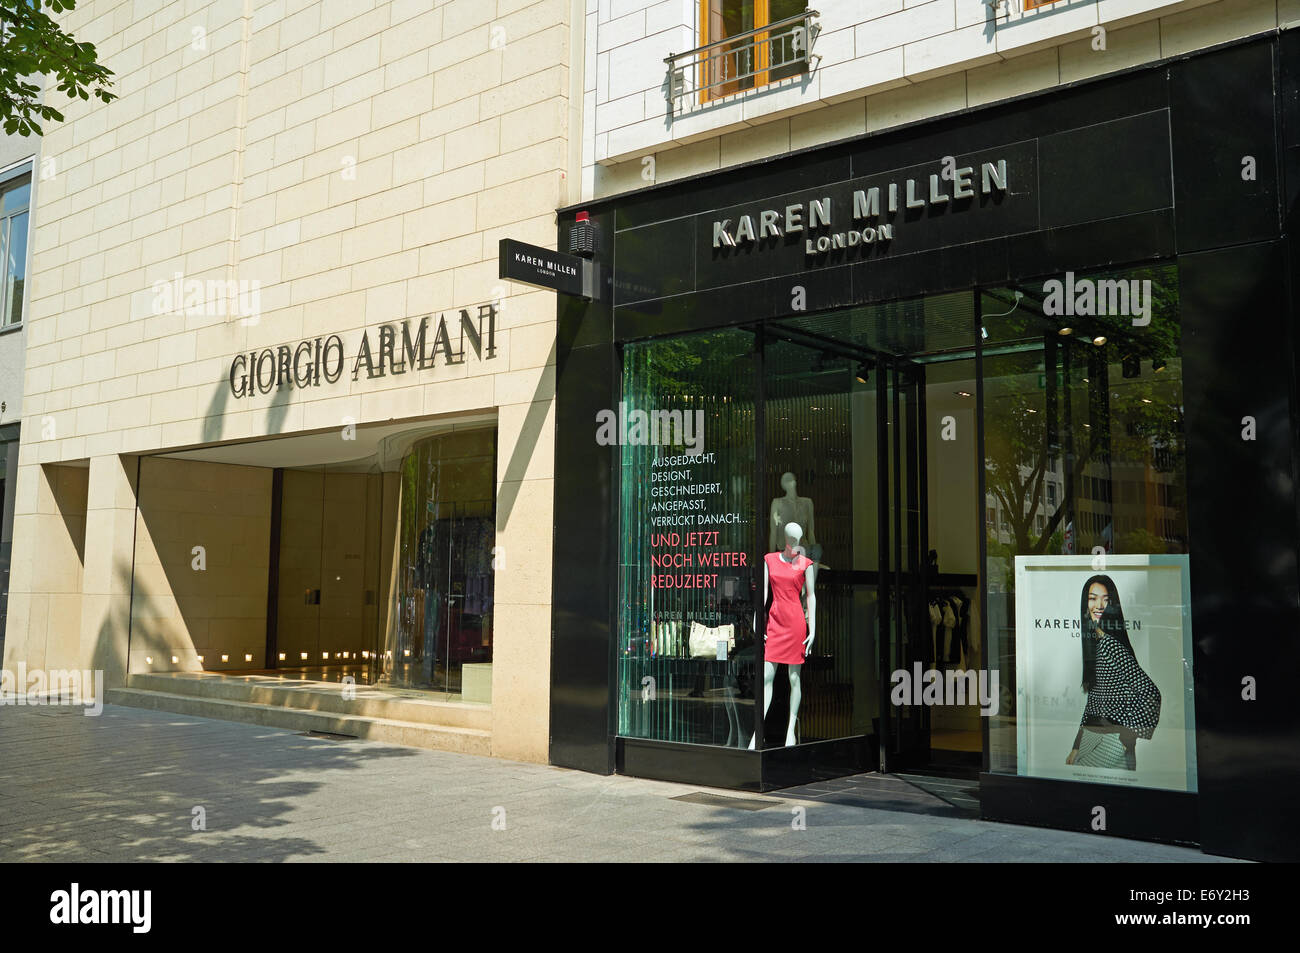 Karen Millen negozio di abbigliamento, Konigsallee, Dusseldorf, Germania. Foto Stock